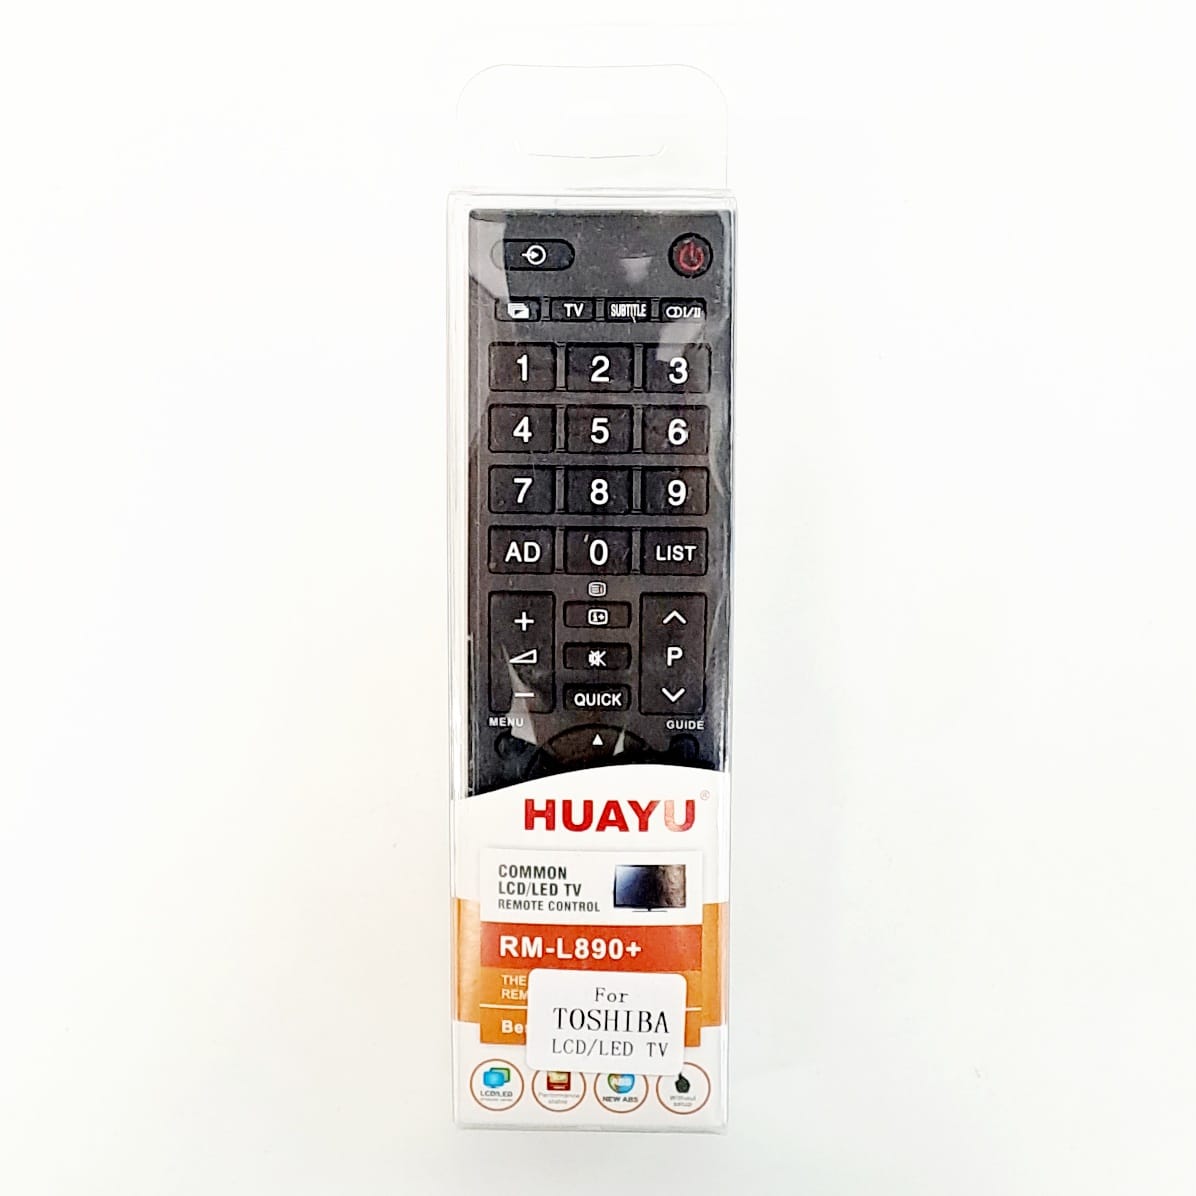 HUAYU Remote Control for Toshiba LCD/LED TV